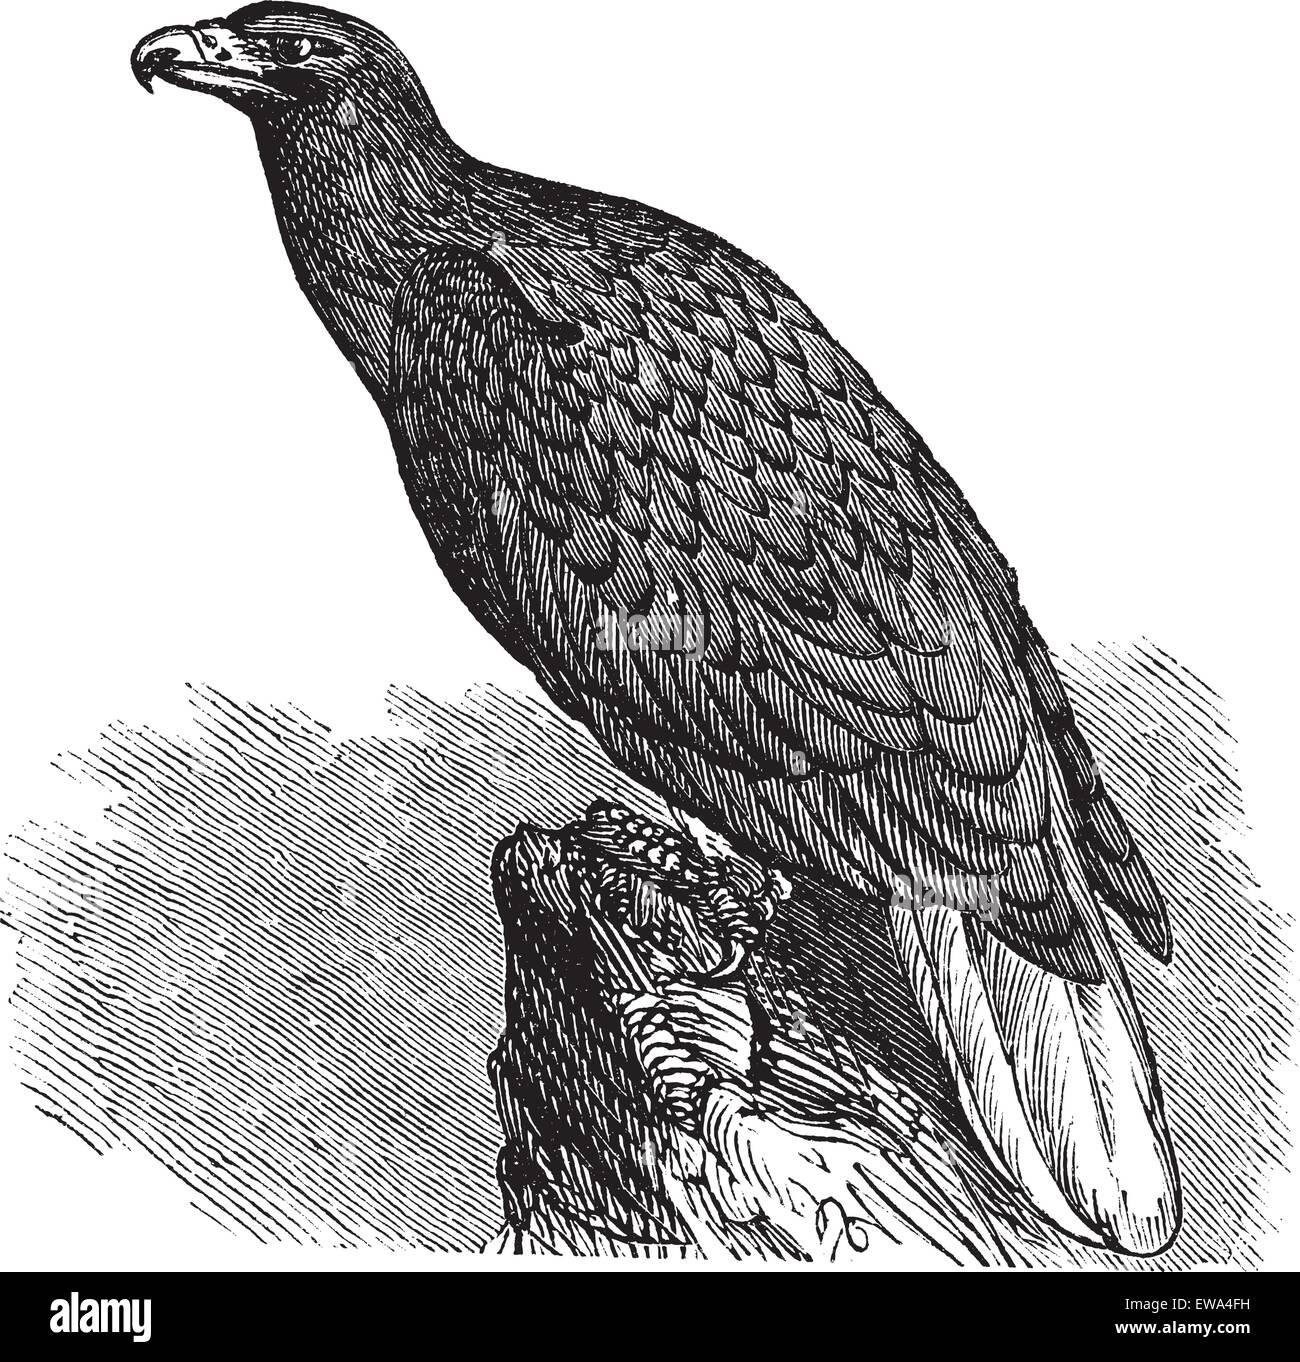 Eagle of Europe (Haliaeetus albicilla) or White-tailed Eagle or Erne or Sea-eagle, vintage engraved illustration. Trousset encyclopedia (1886 - 1891). Stock Vector